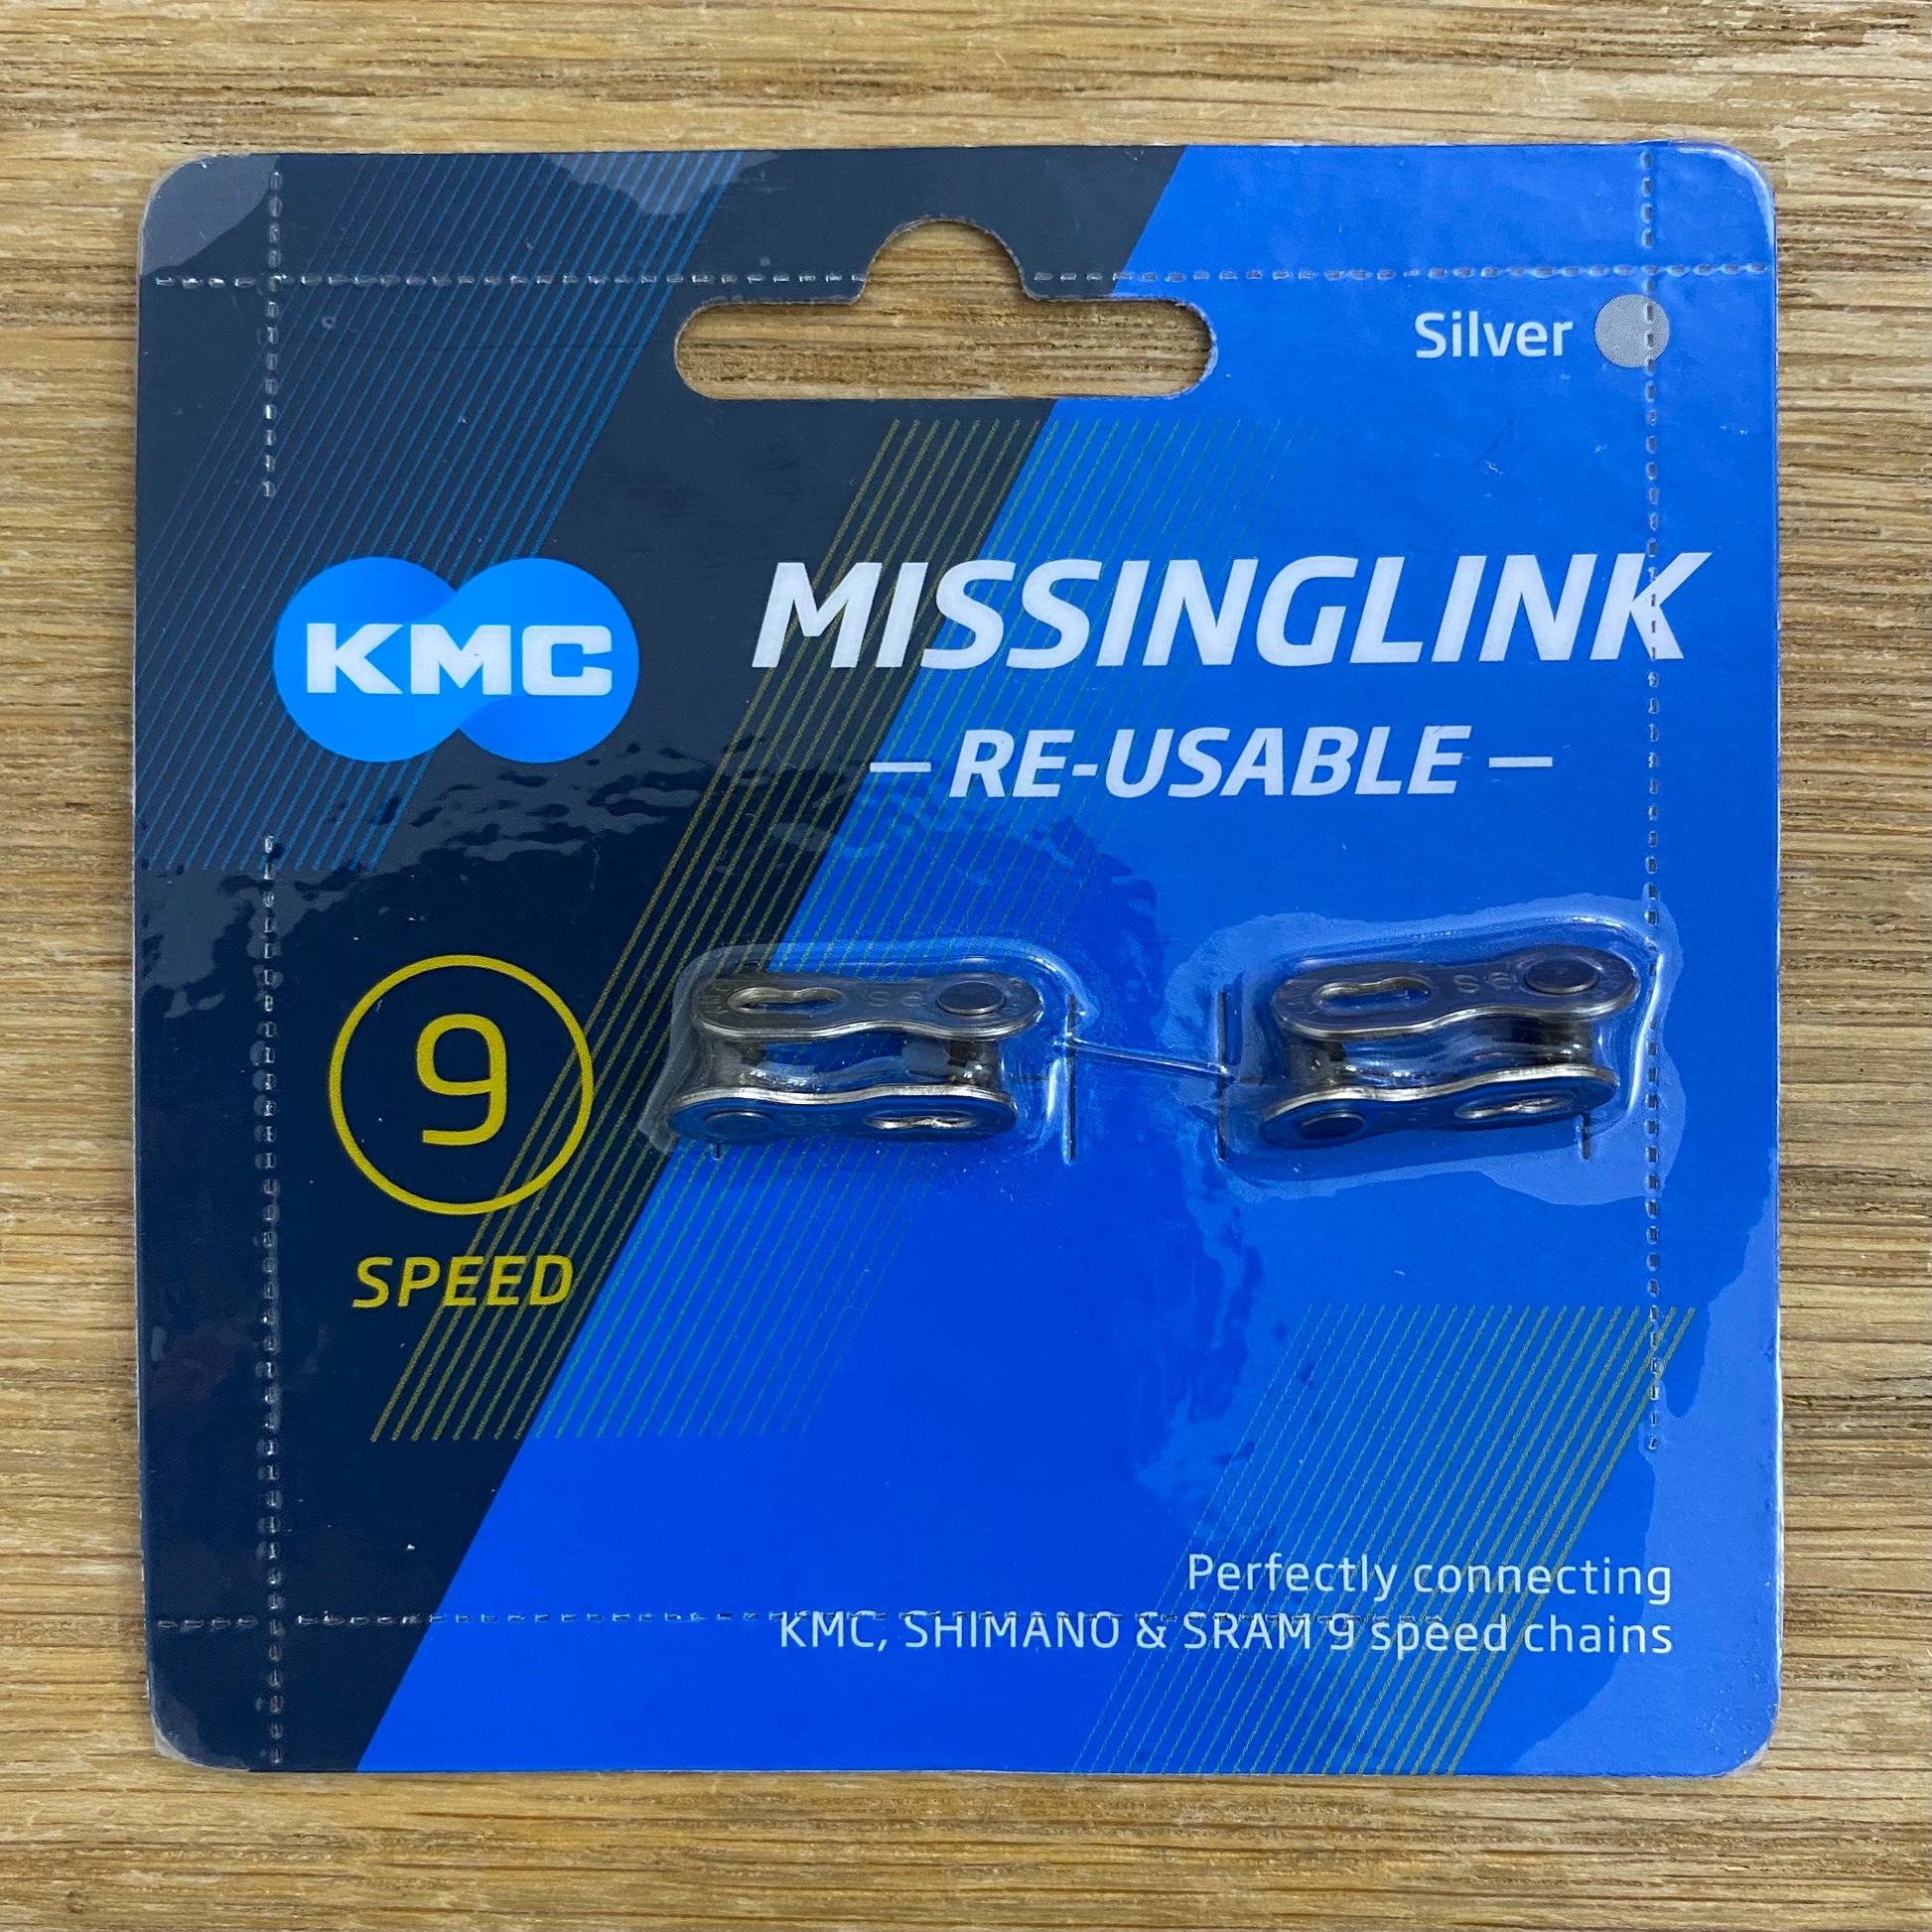 KMC 9 Speed Missing Link